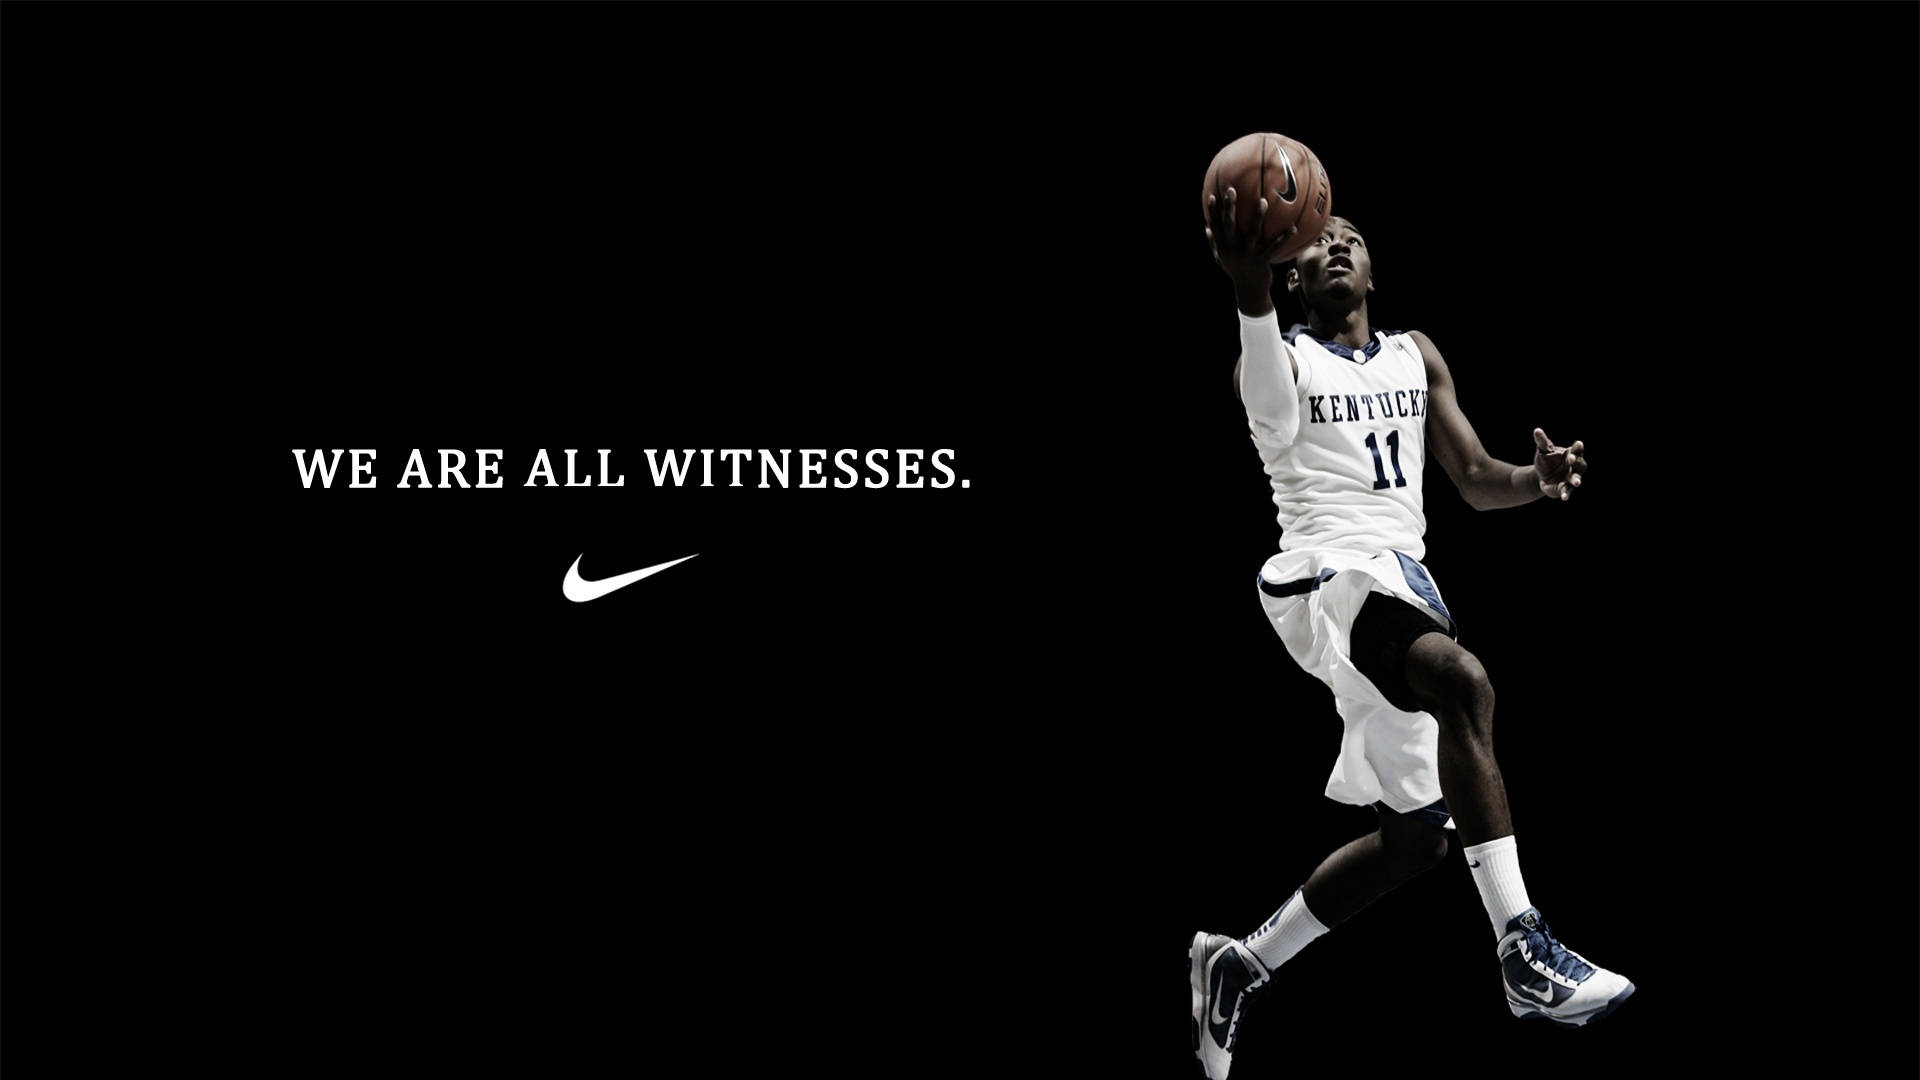 Hd Basketball Nike Poster Wallpaper